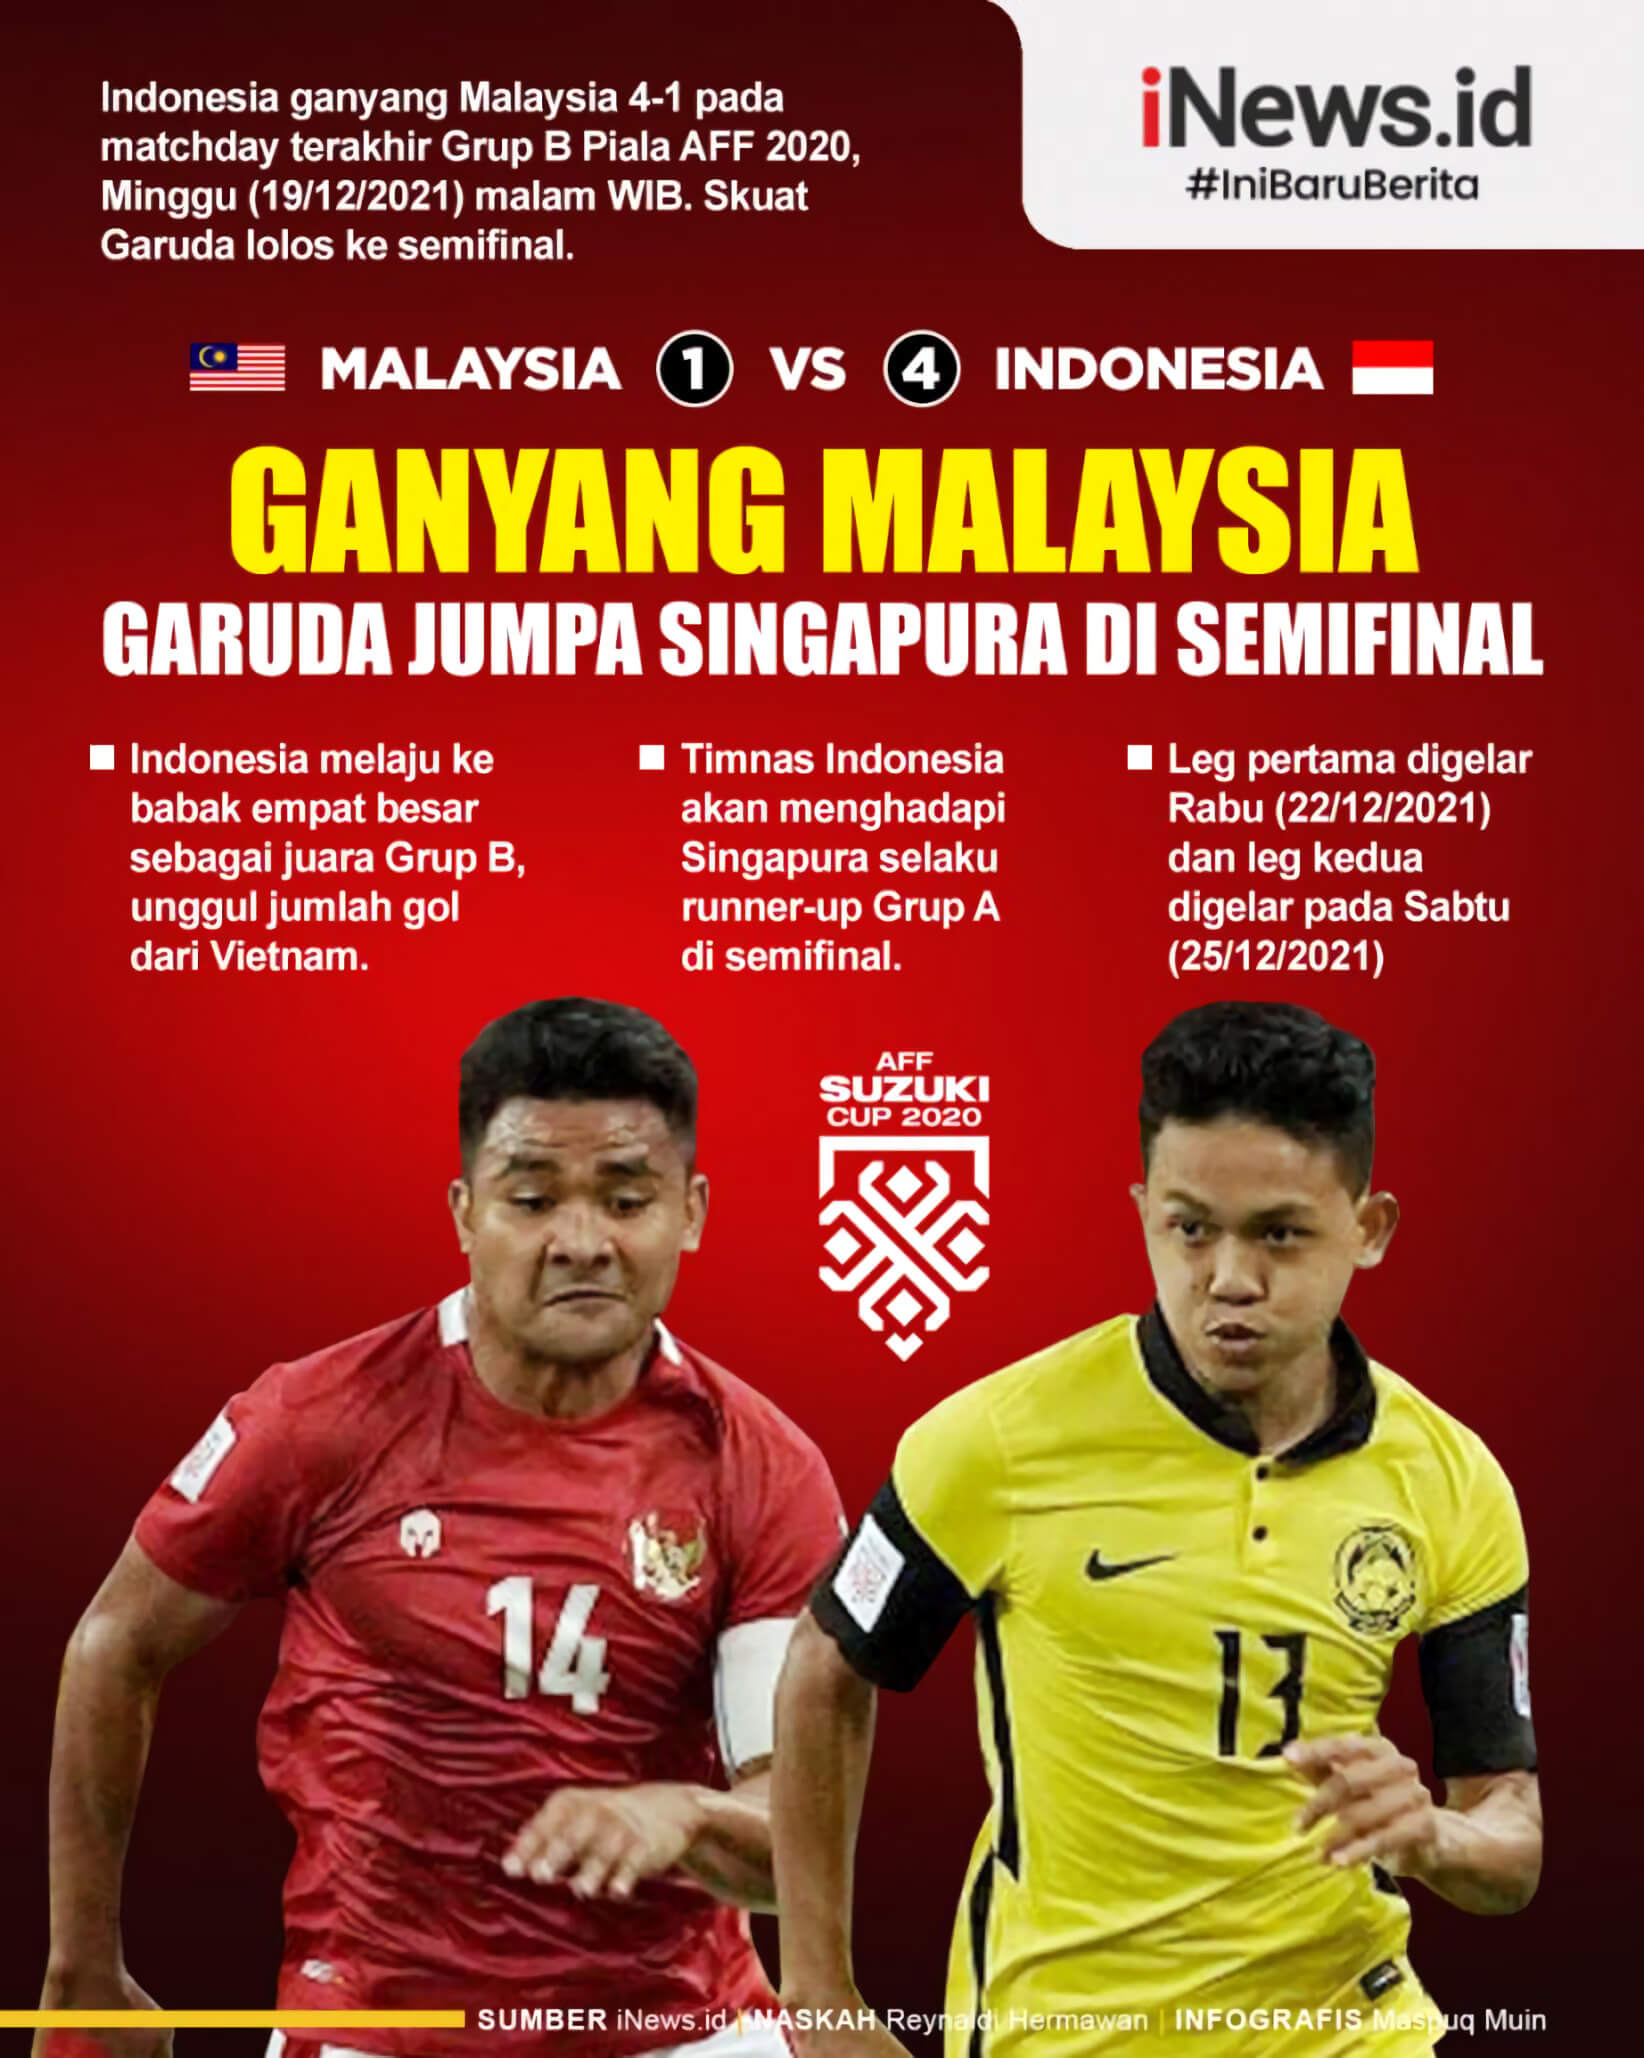 timnas indonesia ganyang malaysia 4-1, egy maulana vikri alhamdulillah ya allah